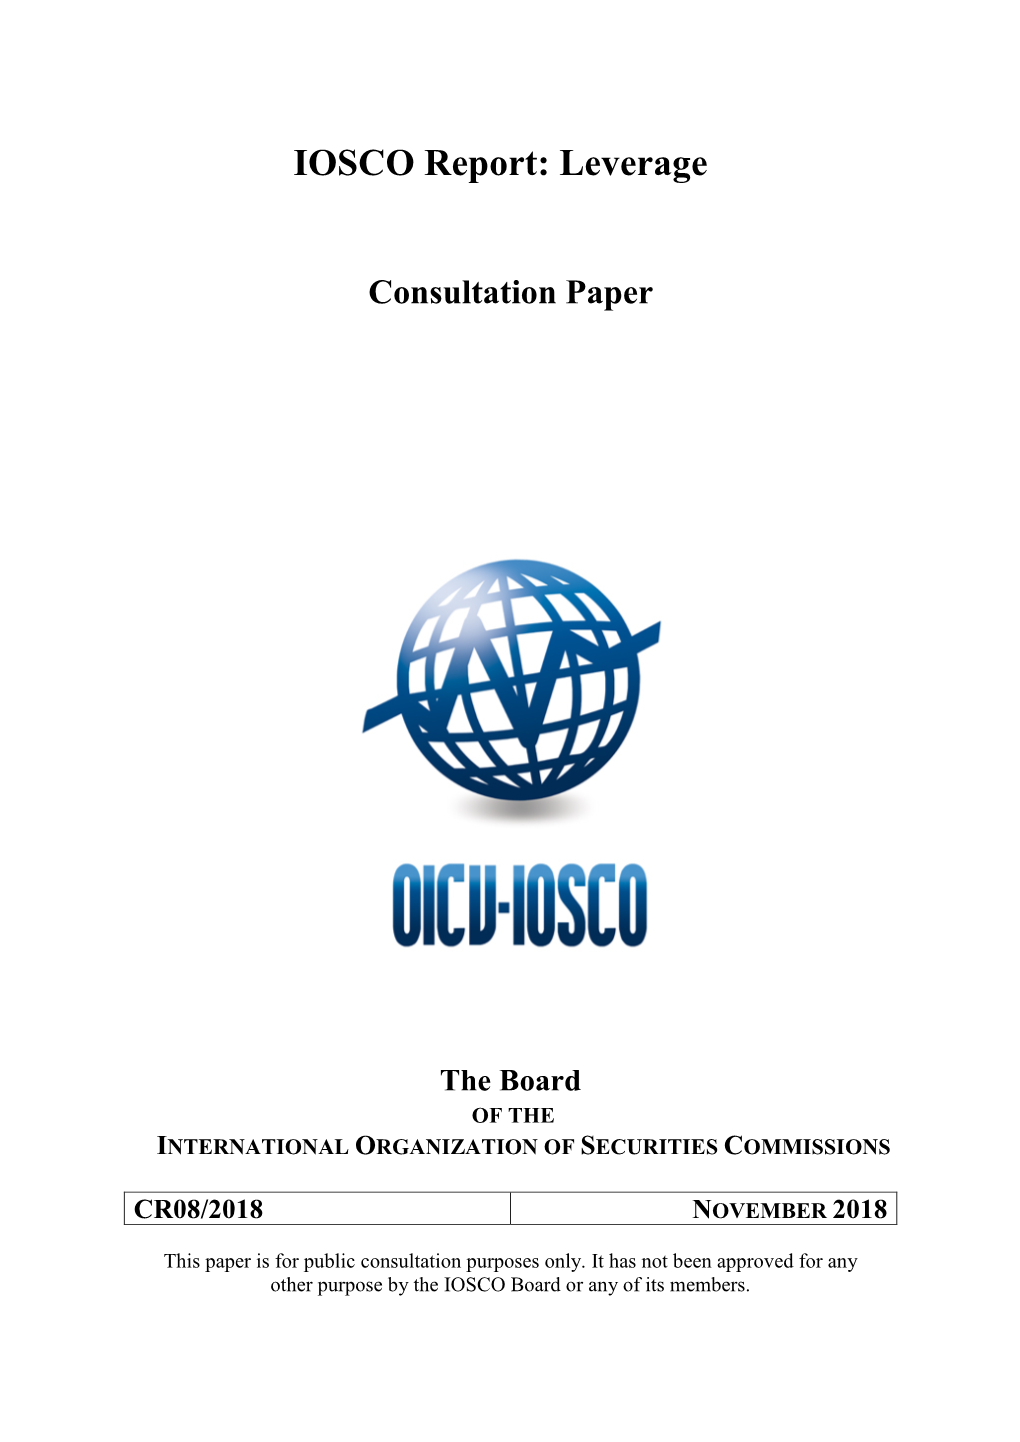 IOSCO Report: Leverage Consultation Paper